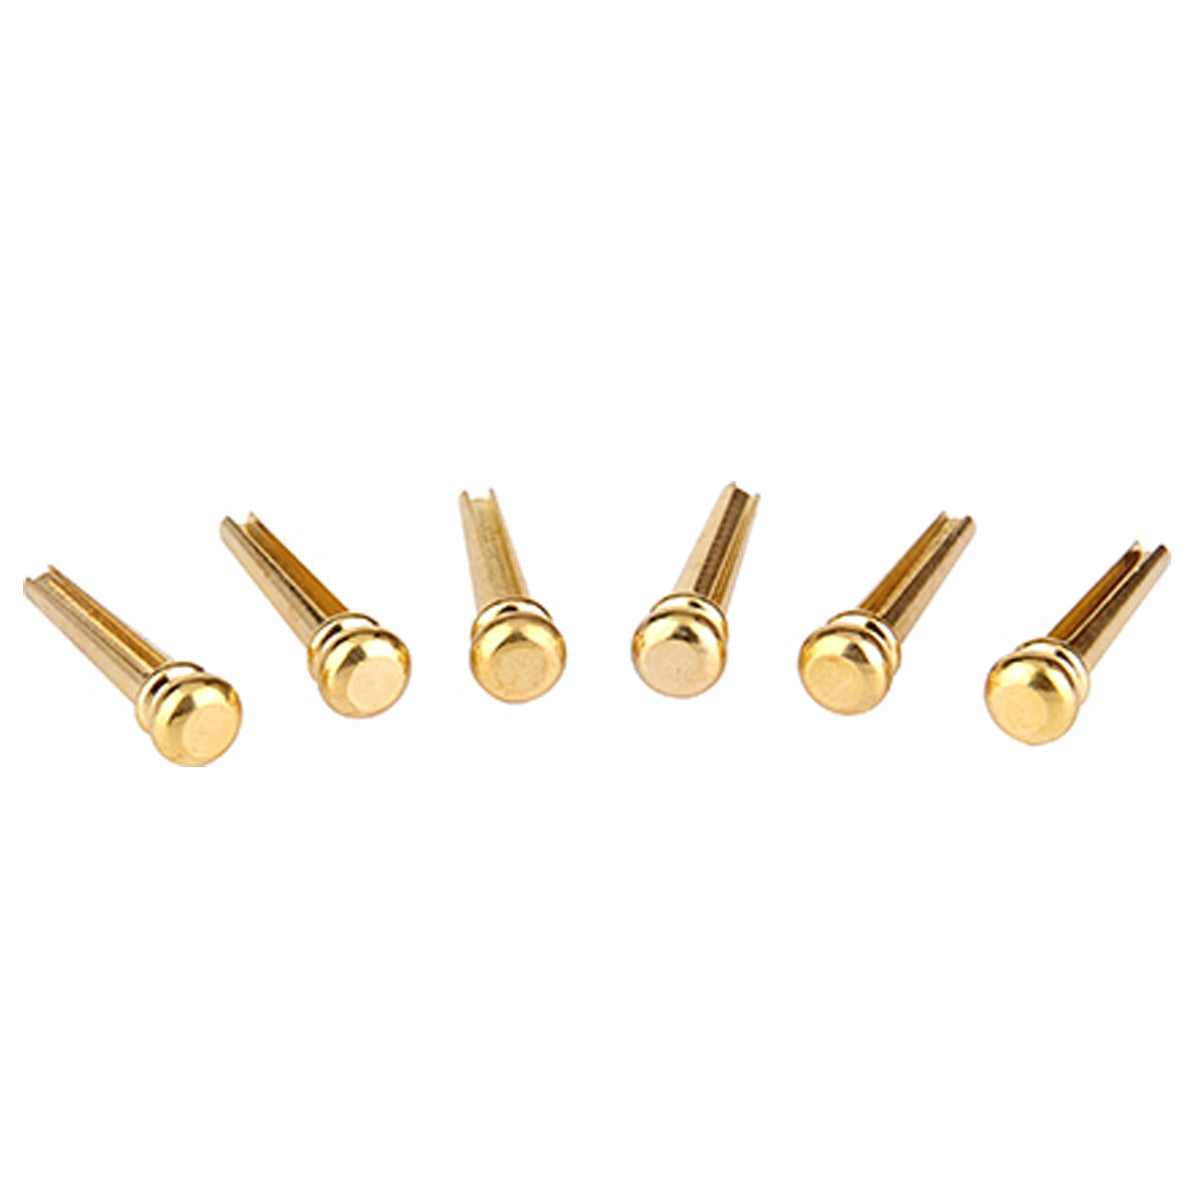 Musiclily Brass Acoustic Guitar Bridge Pins,Gold(6 Pieces)